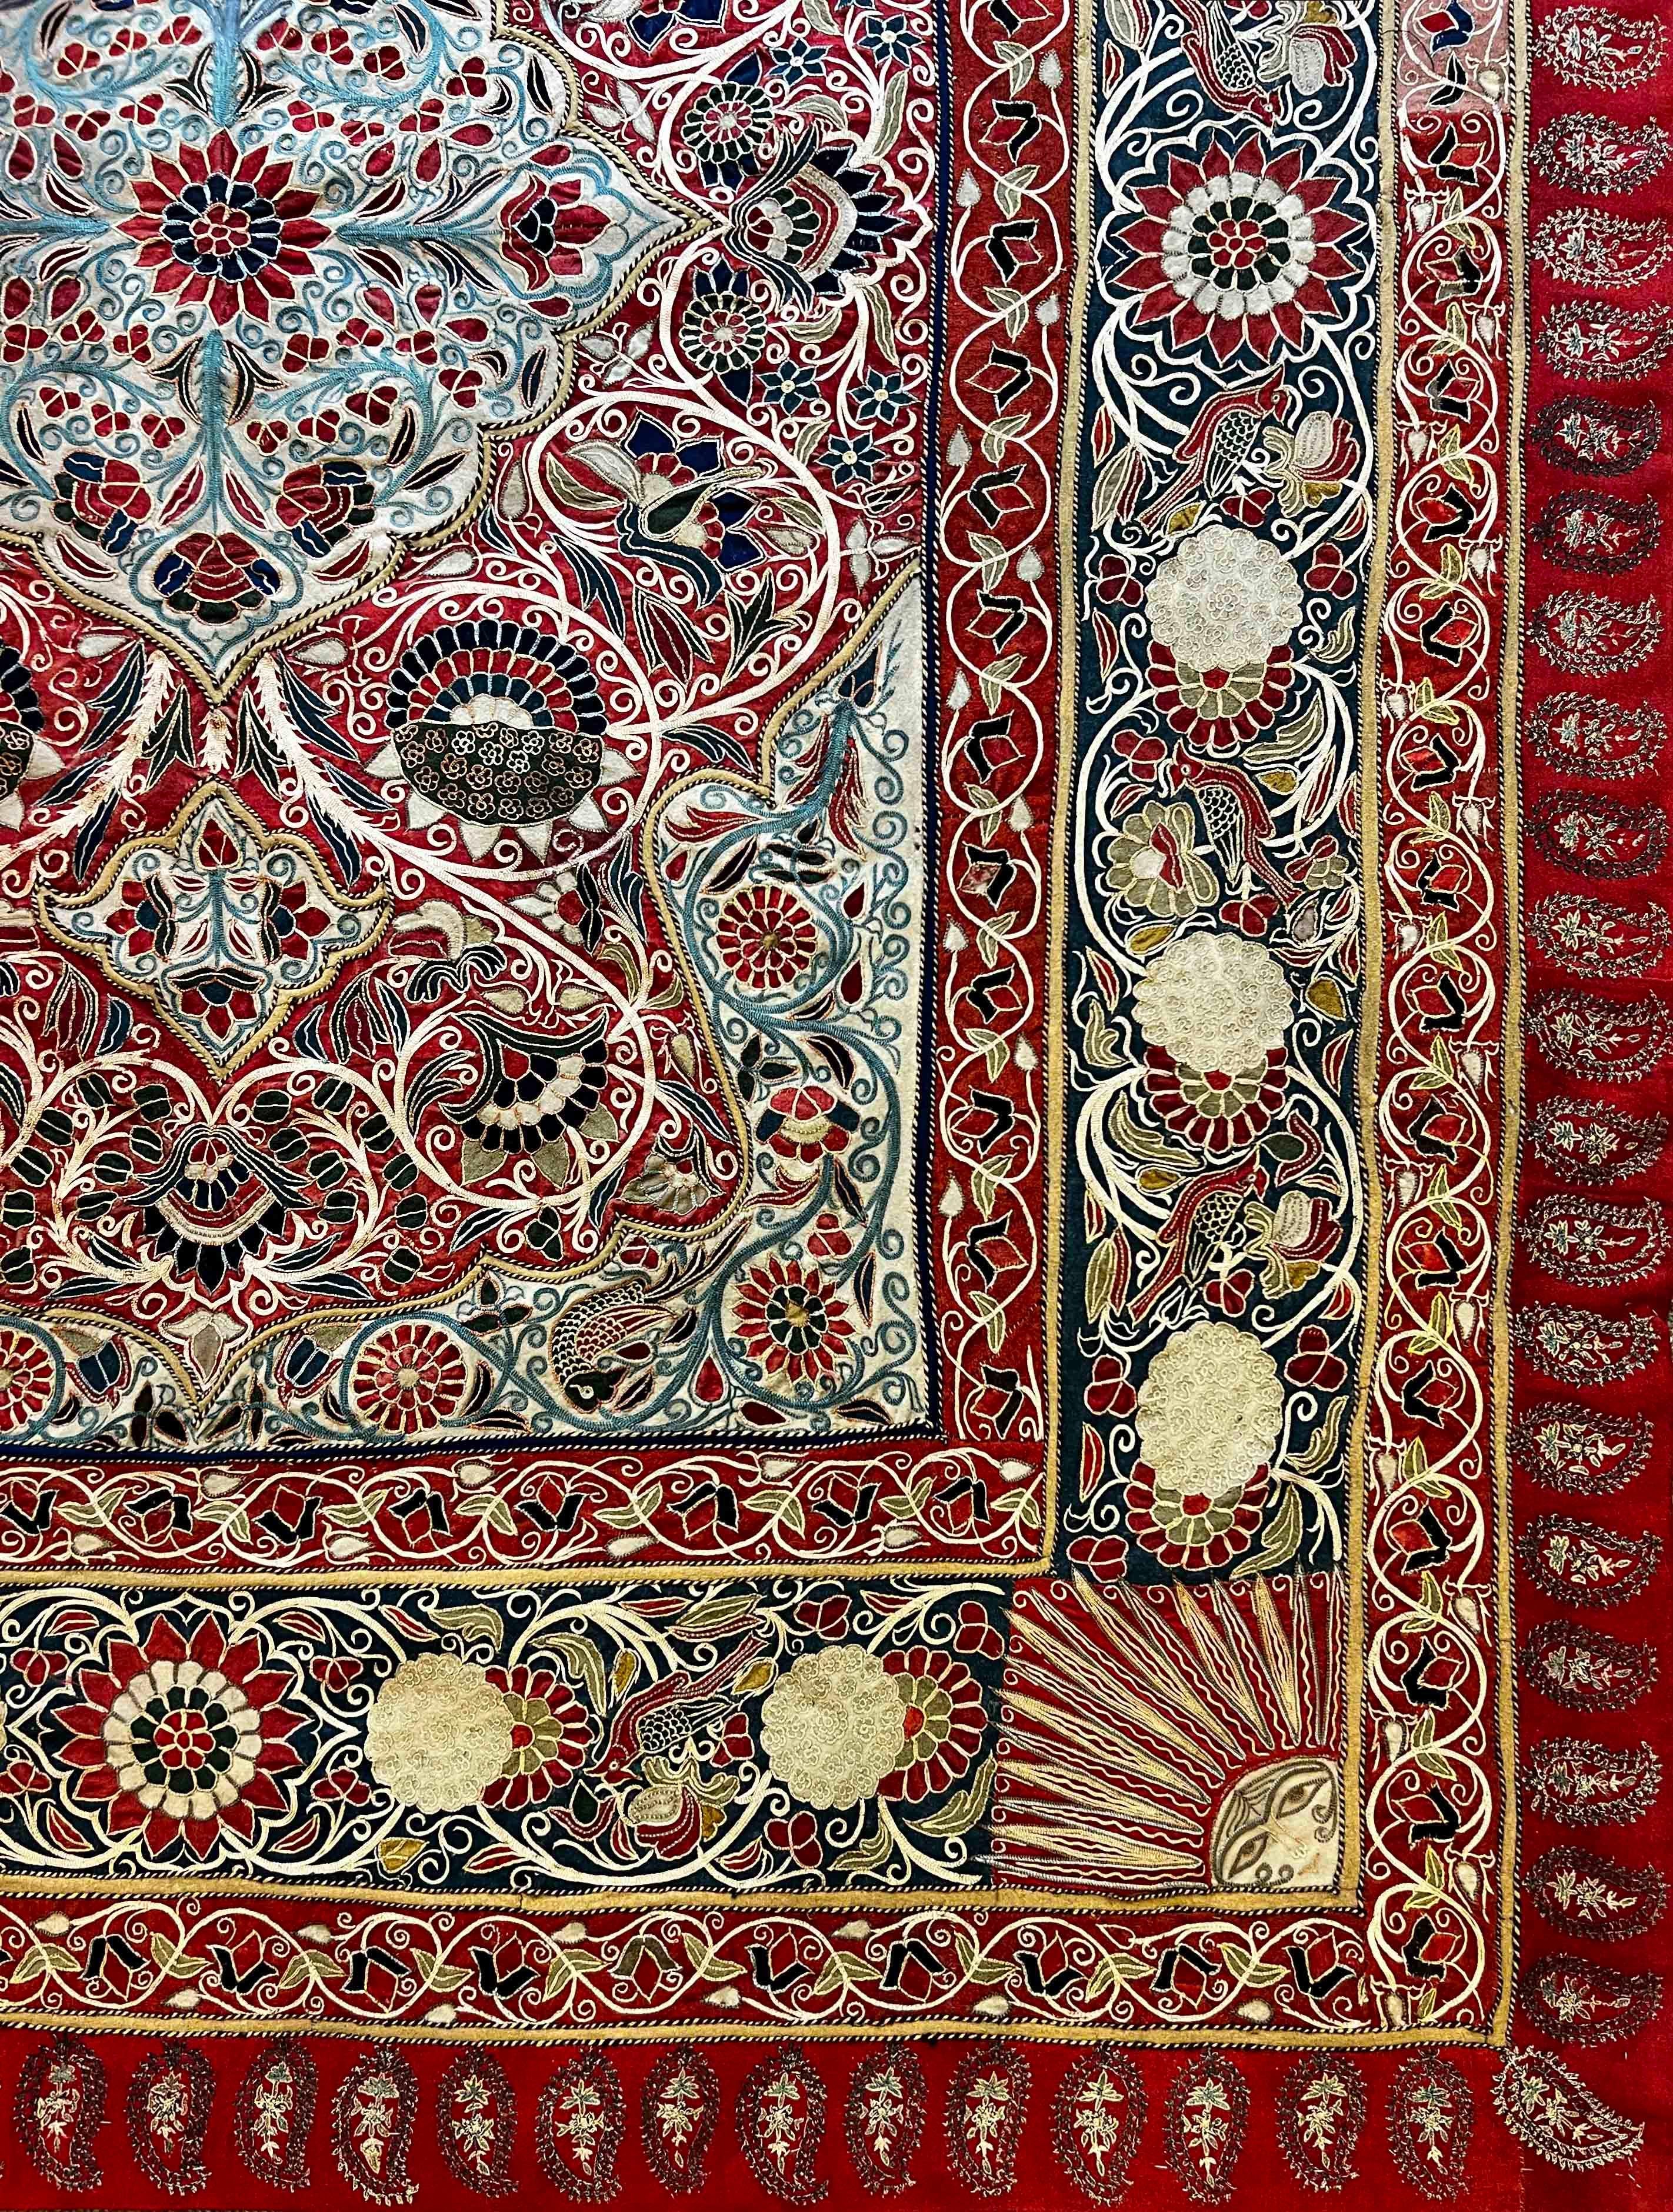 Hand-Crafted Persian Decorative Fabric of 19th century  (RESHT) Rashtidouzi - N°1215 For Sale